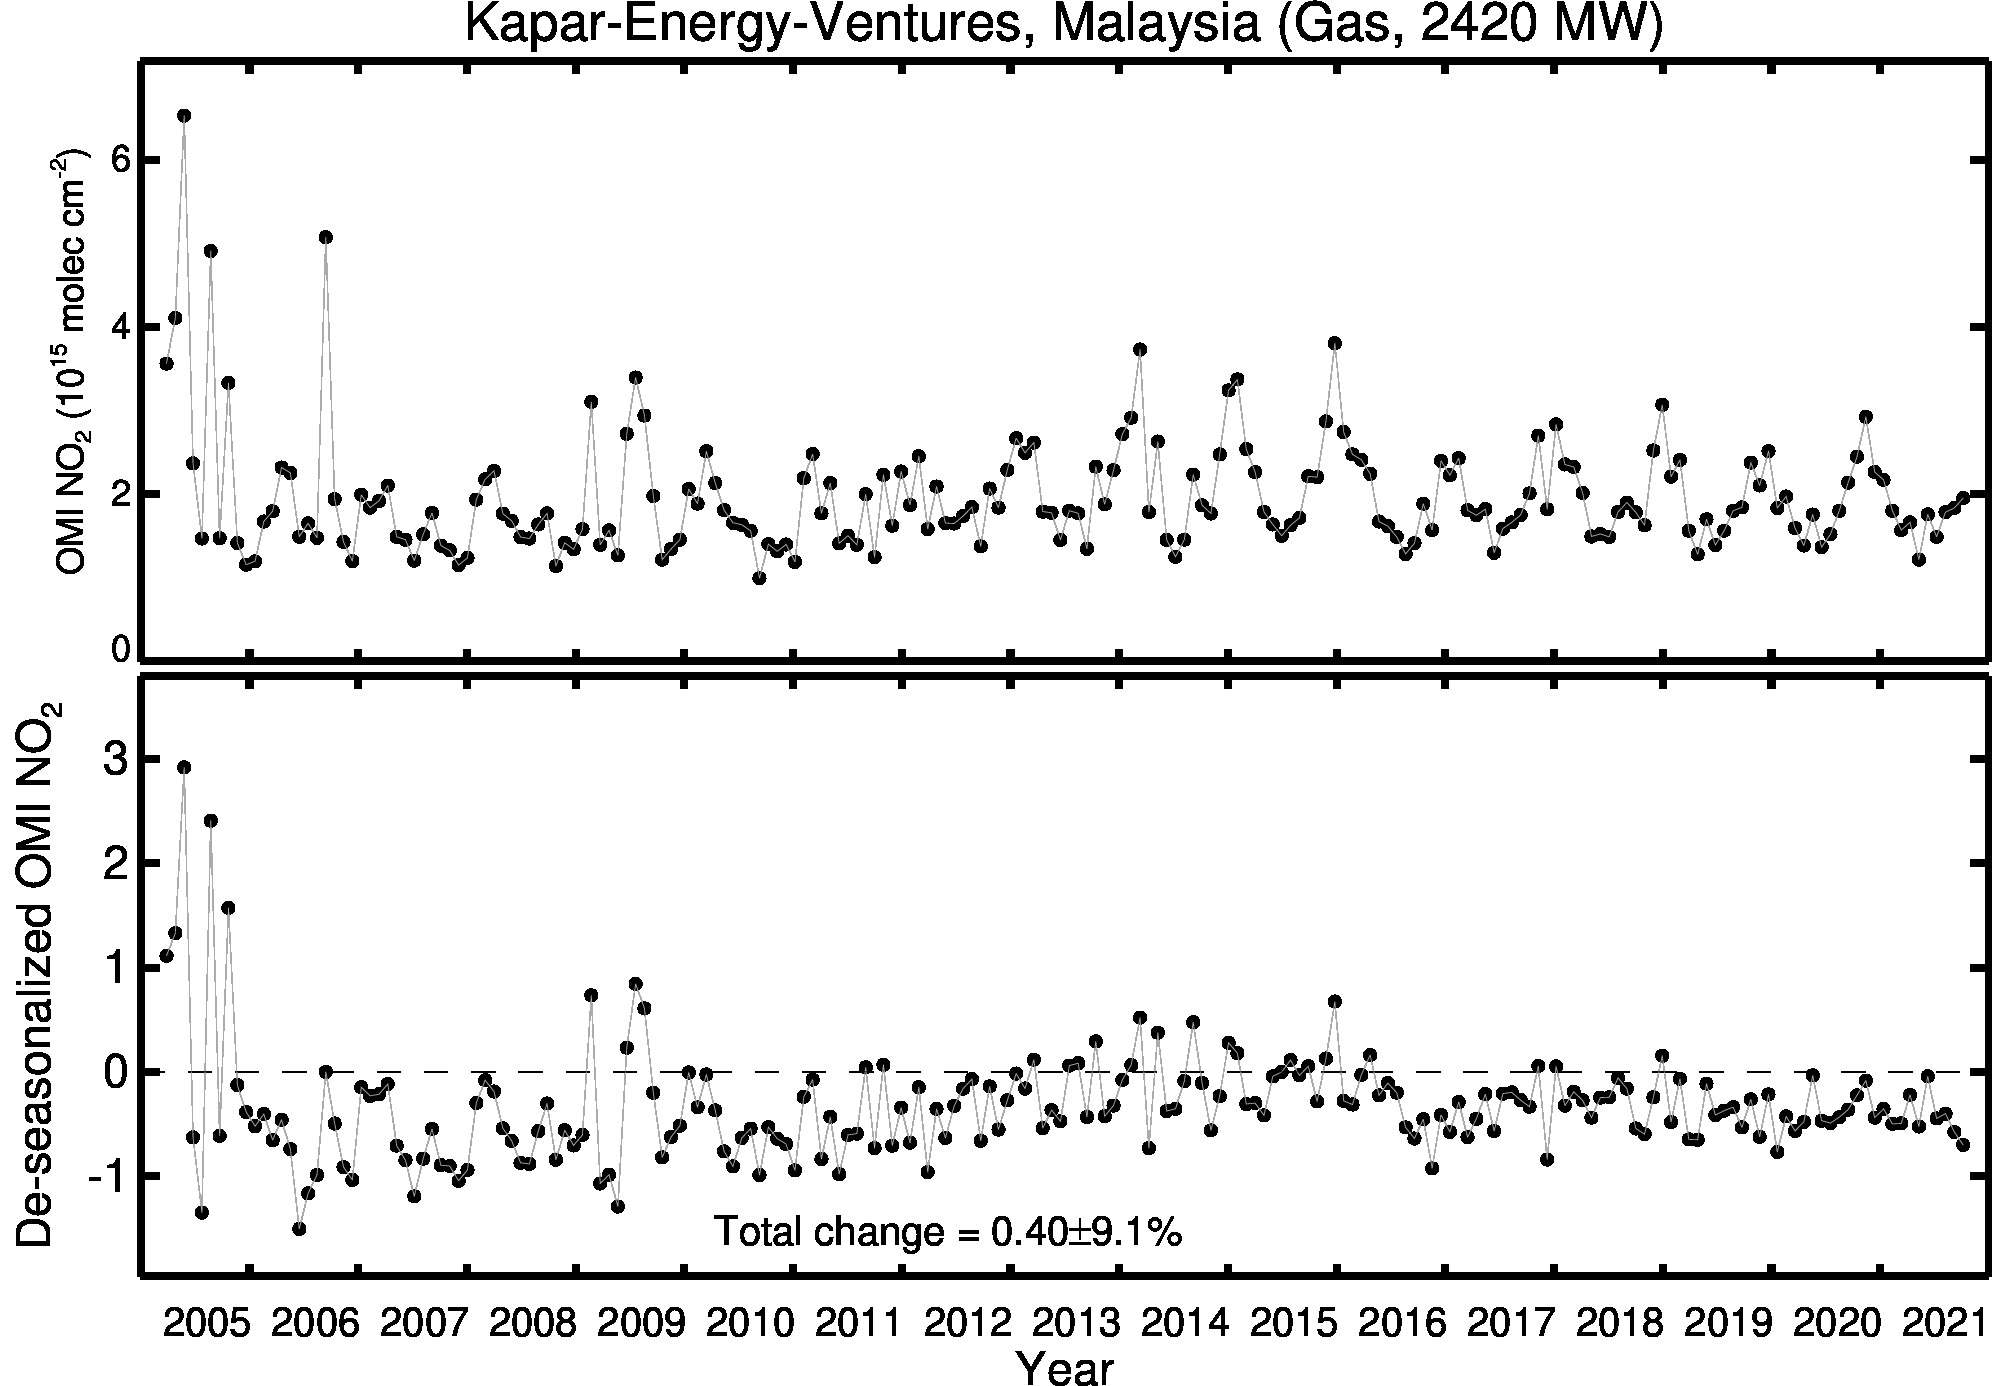 Kapar Energy Ventures Line Plot 2005-2021